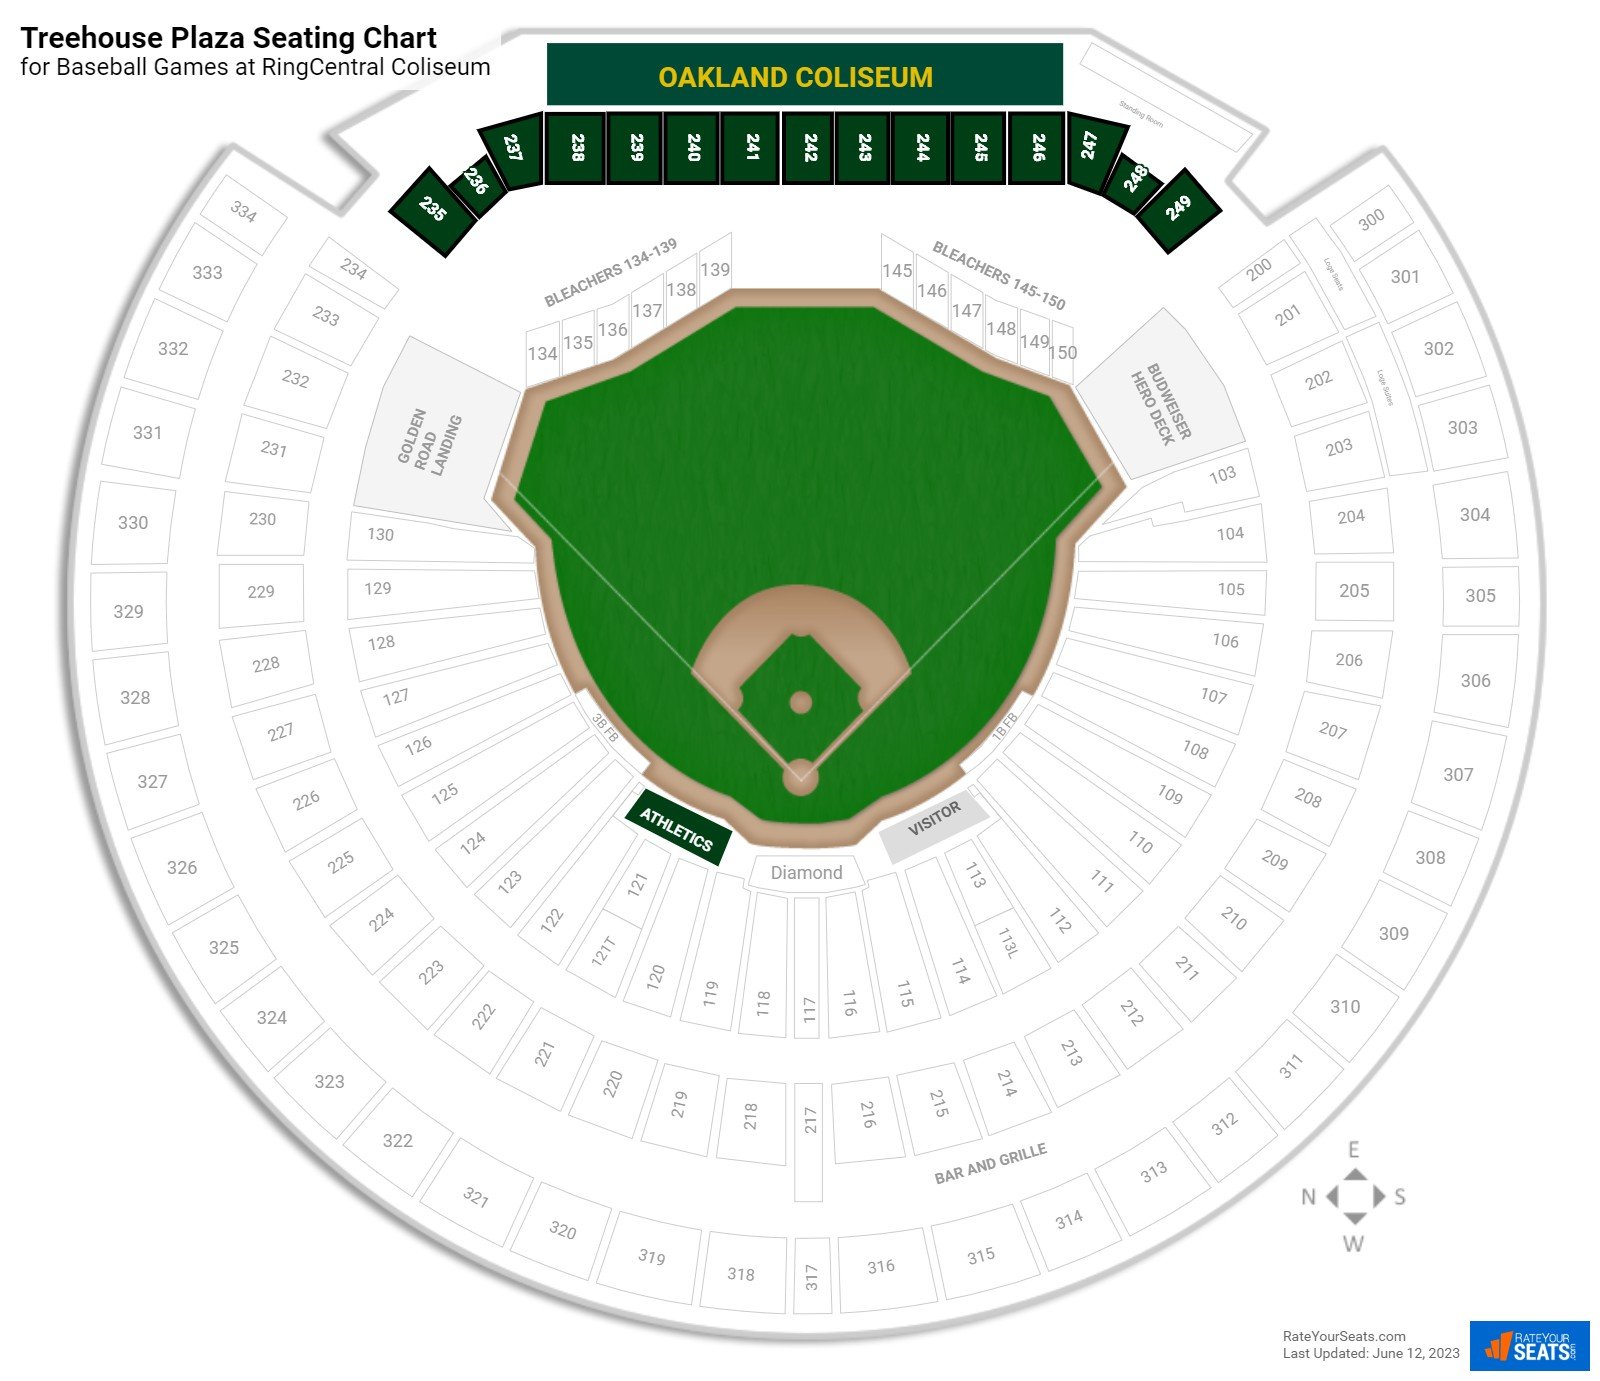 Baseball Treehouse Plaza Seating Chart at RingCentral Coliseum